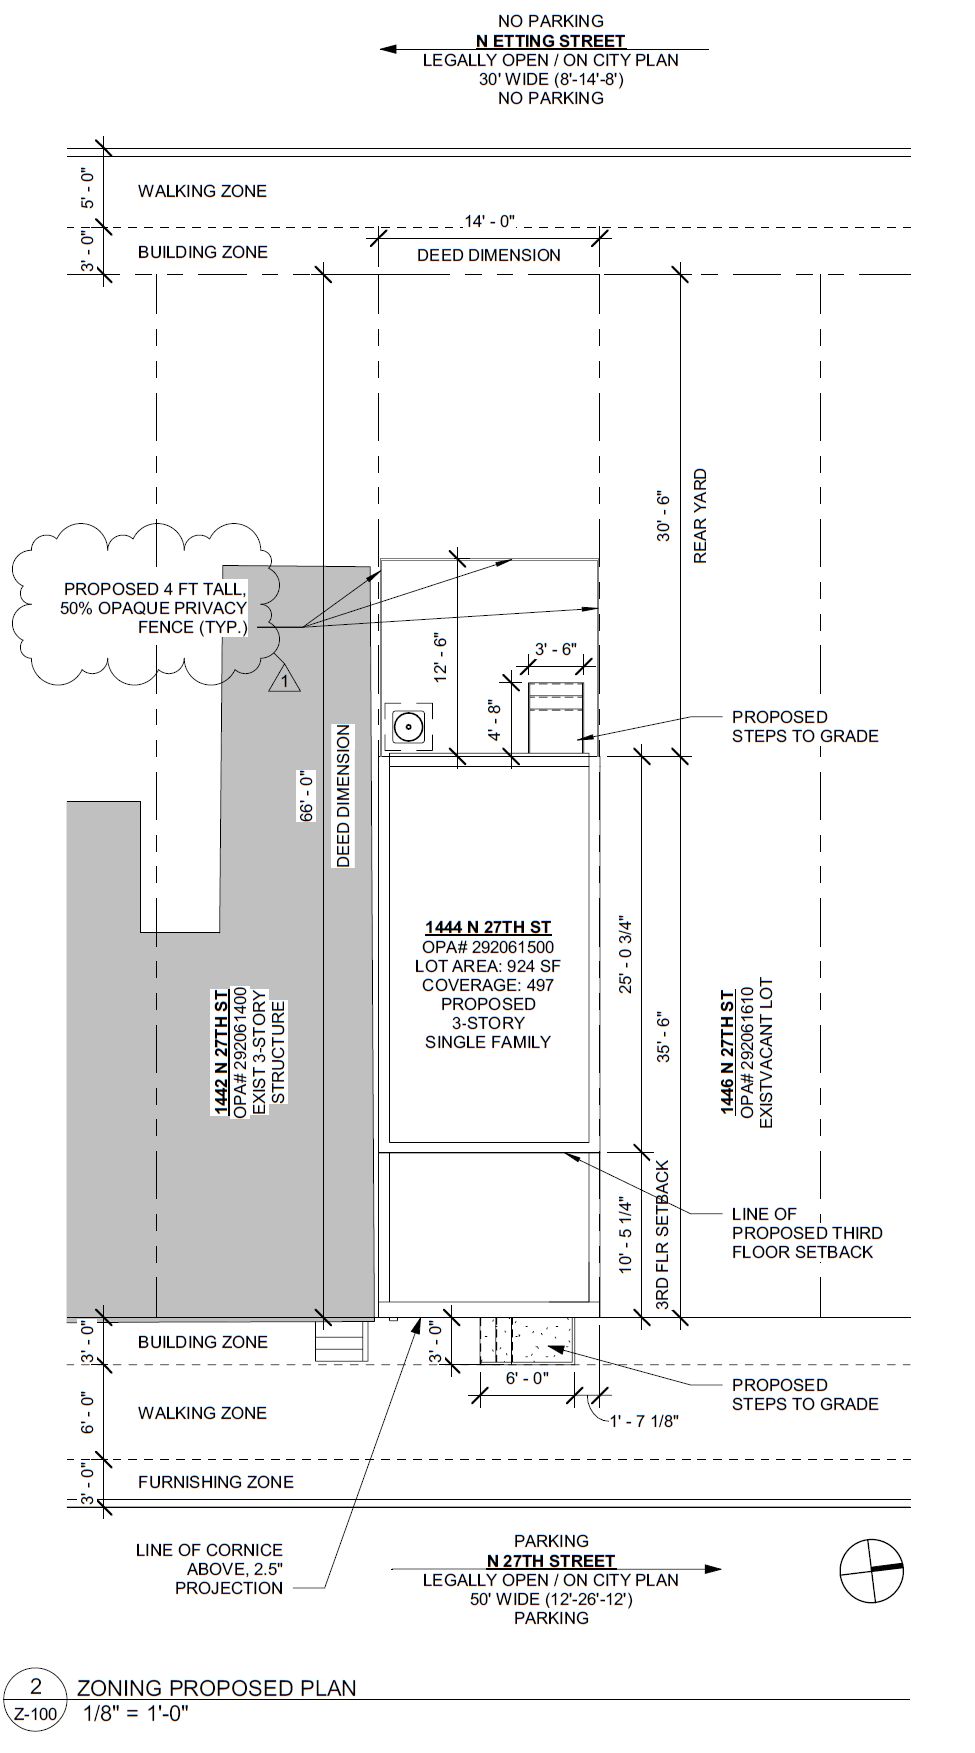 1444 North 27th Street. Site plan. Credit: Moto Designshop via the City of Philadelphia